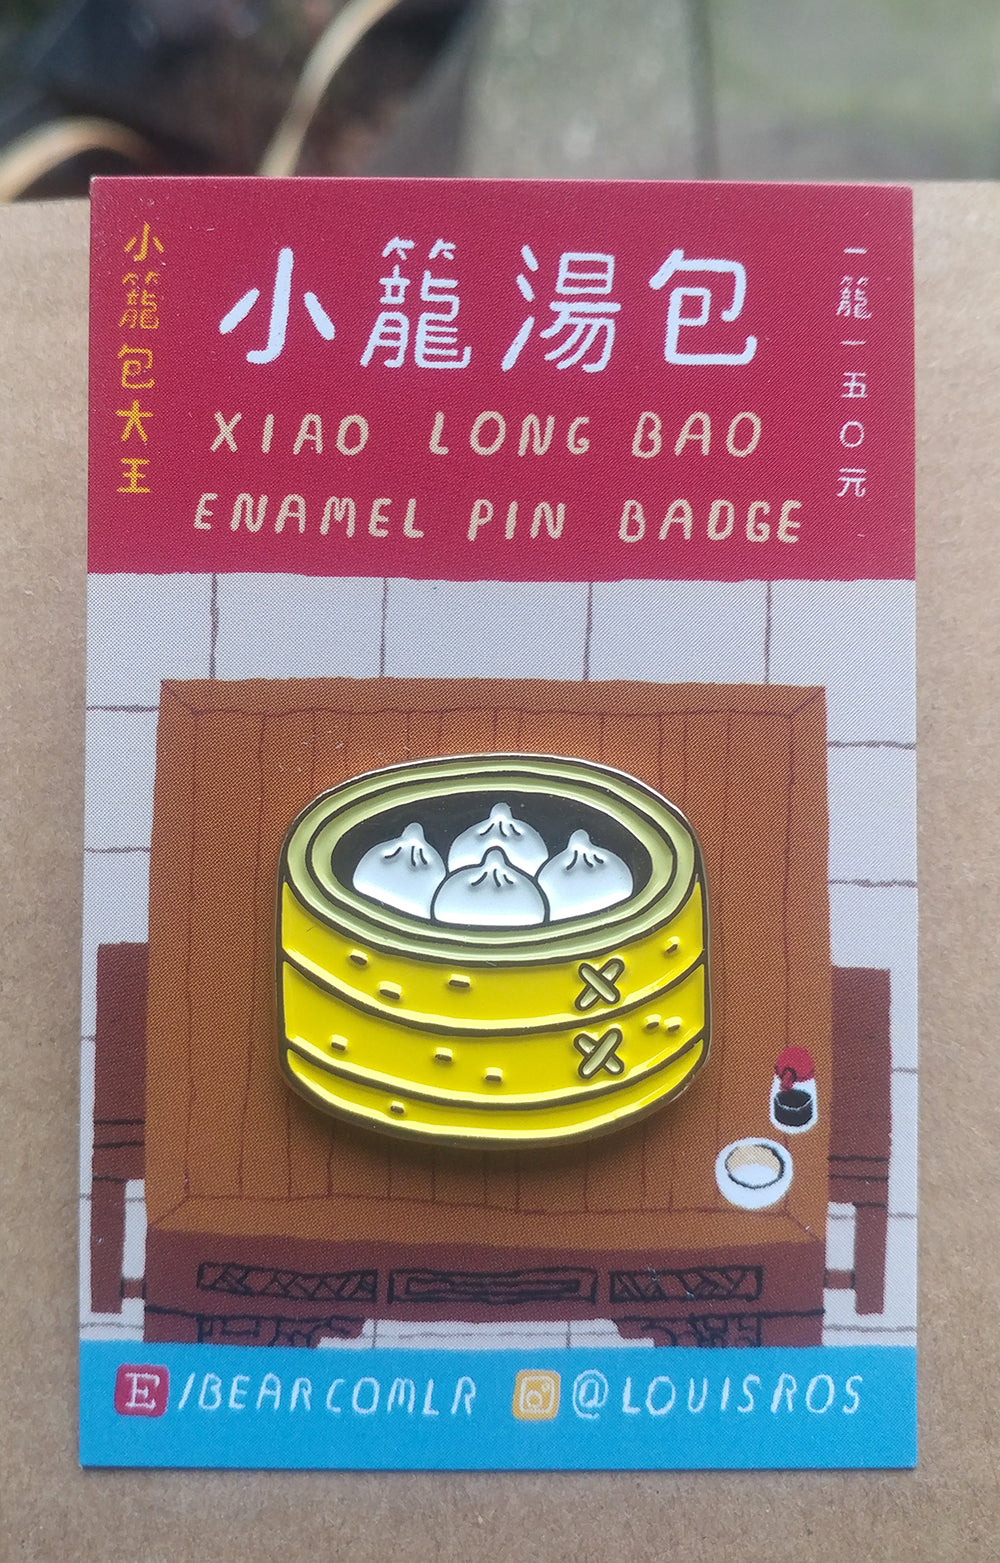 Soup dumplings enamel pin badge.